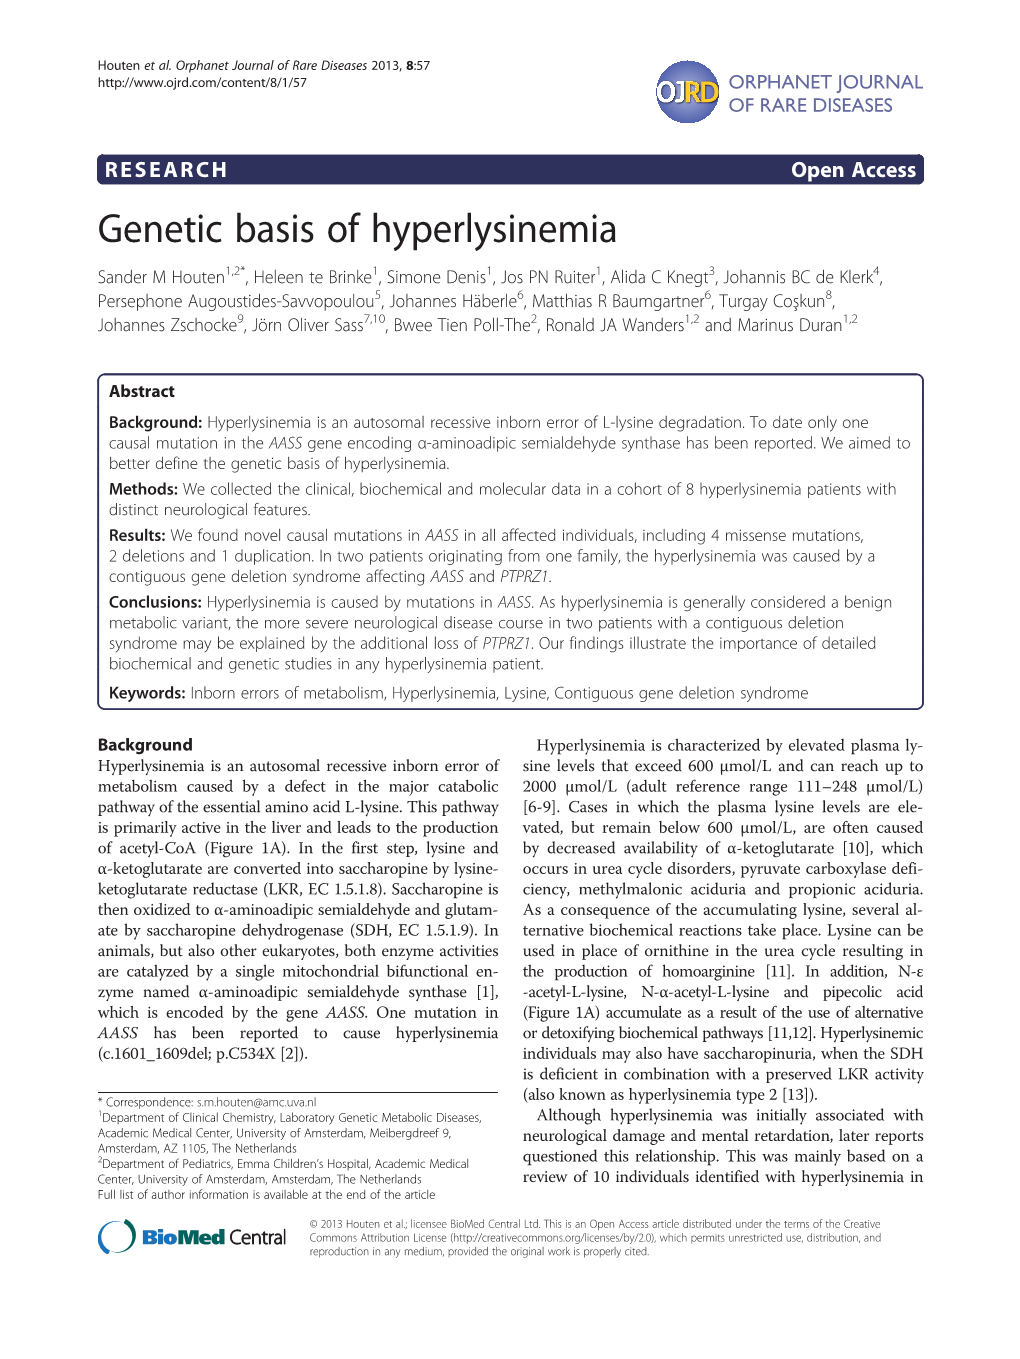 Genetic Basis of Hyperlysinemia